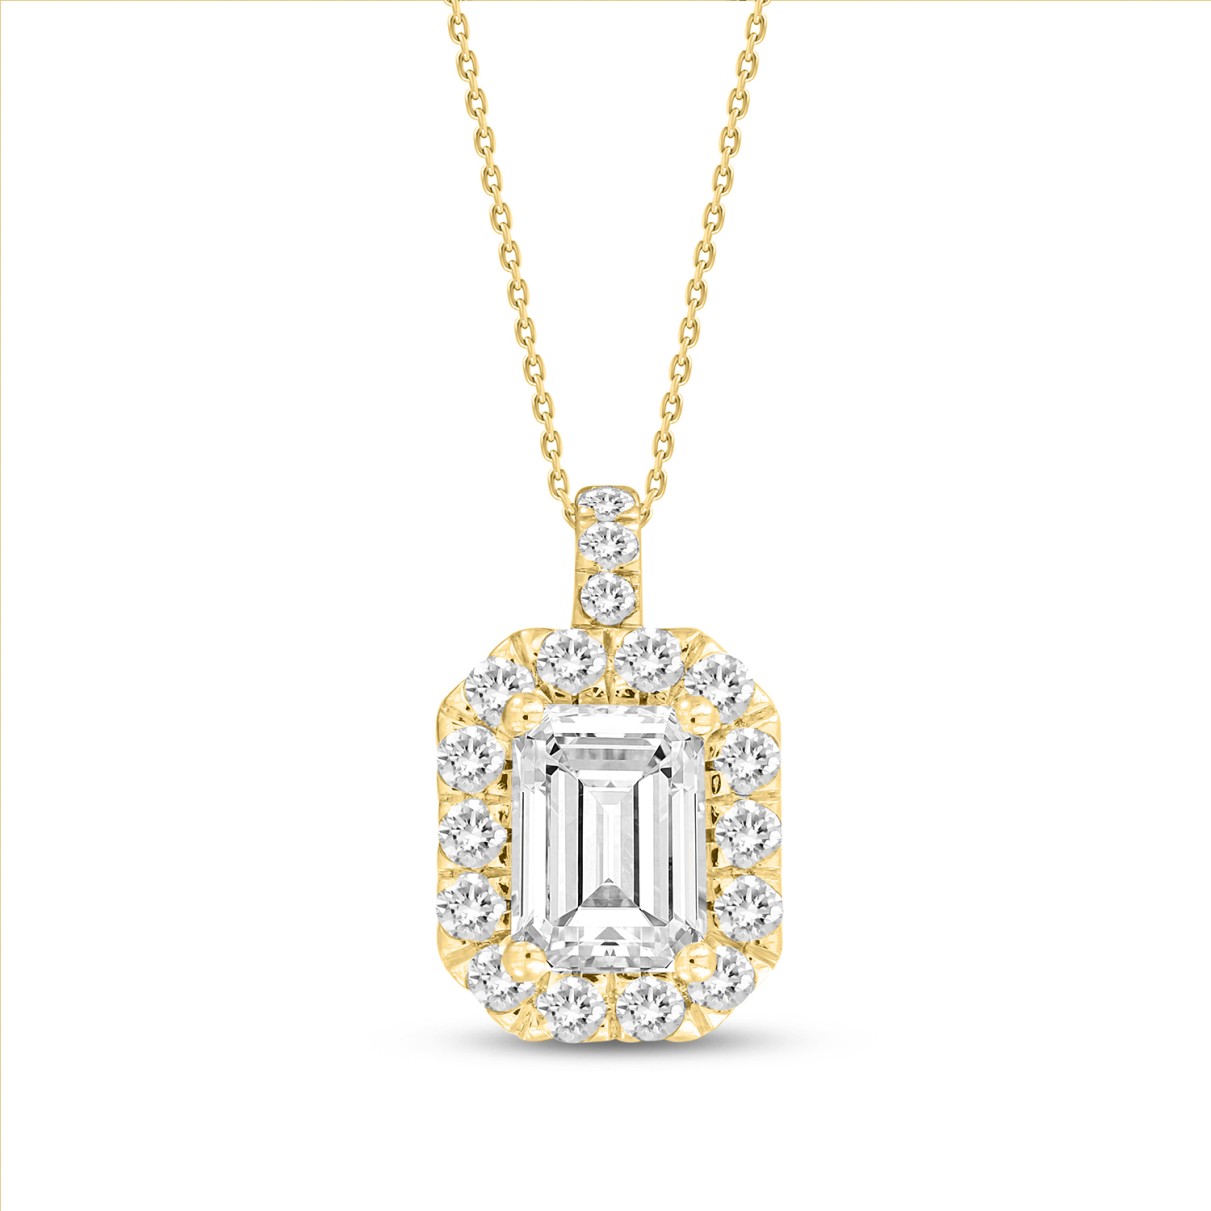 14K YELLOW GOLD 1 3/8CT ROUND EMERALD DIAMOND LADIES PENDANT WITH CHAIN (CENTER STONE EMERALD DIAMOND 1CT )